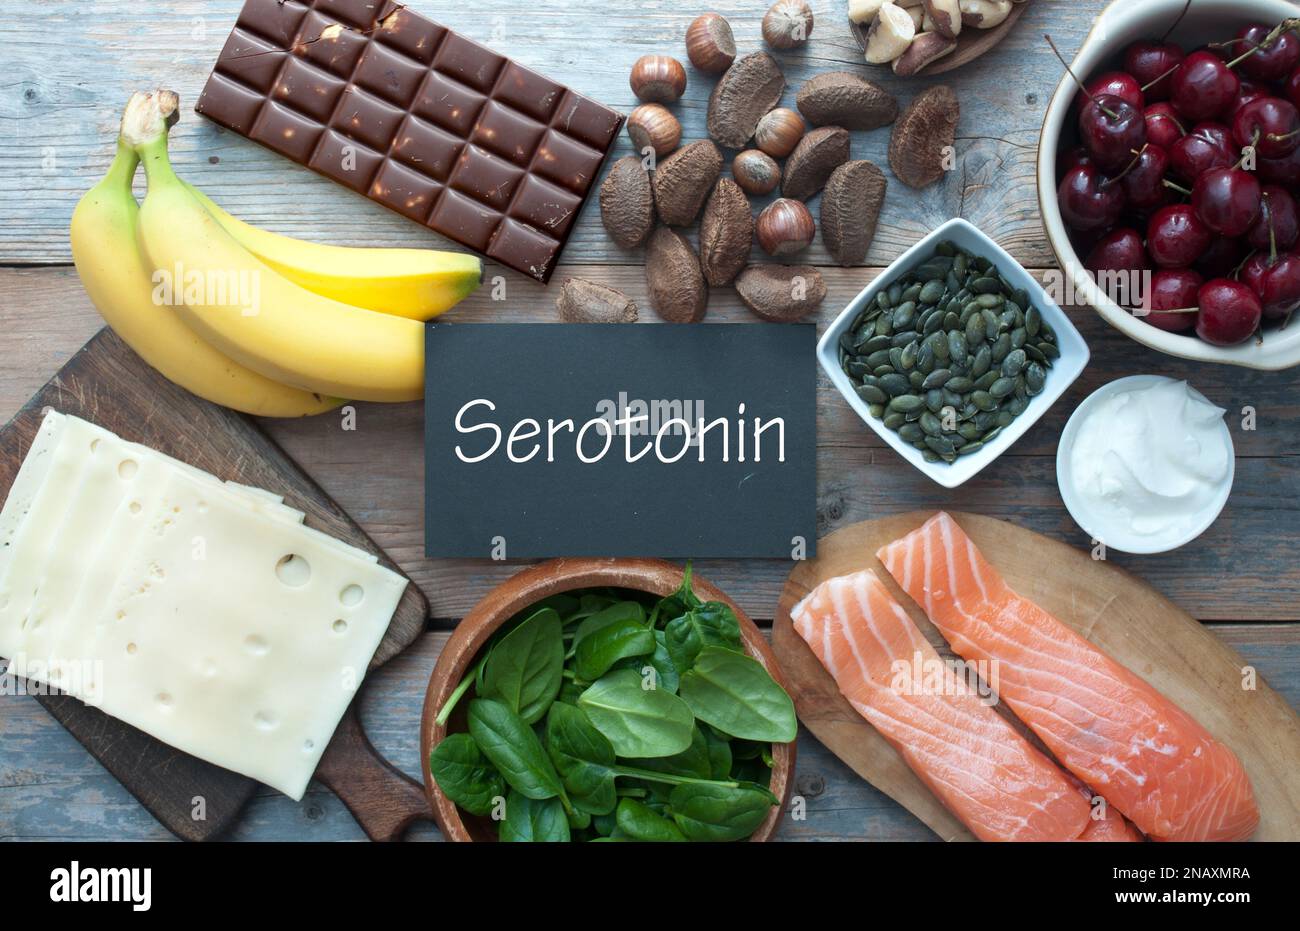 Serotonin, good mood food concept, inlcluding brazil nuts, dark chocolate, cherries and salmon Stock Photo